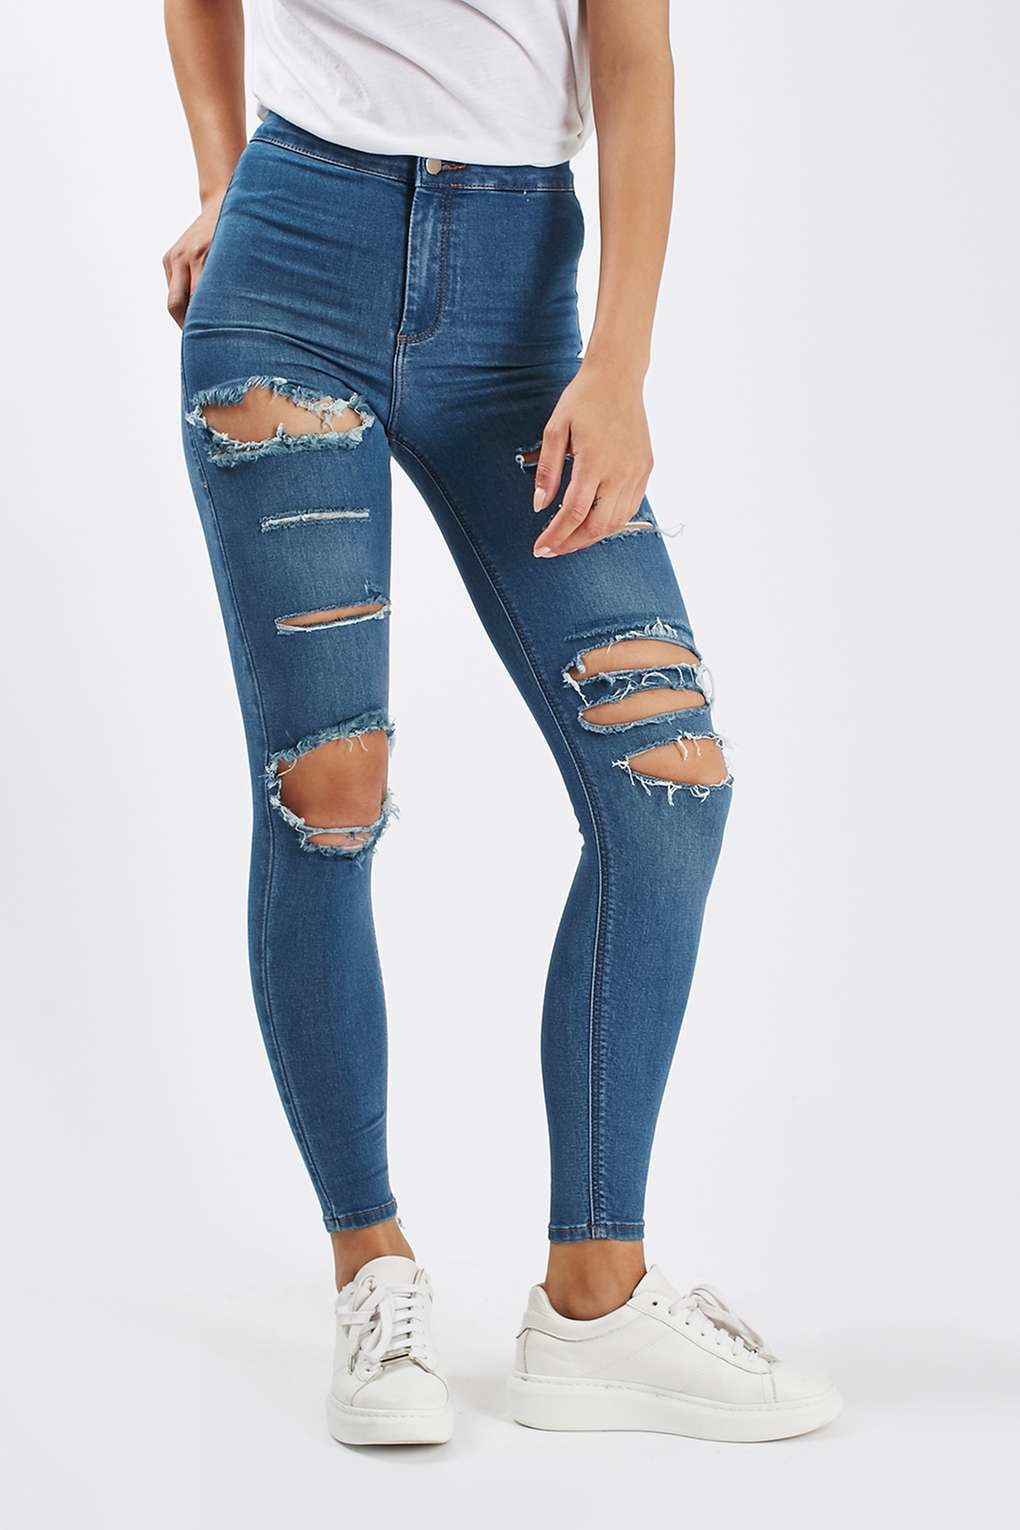 topshop jeans uk